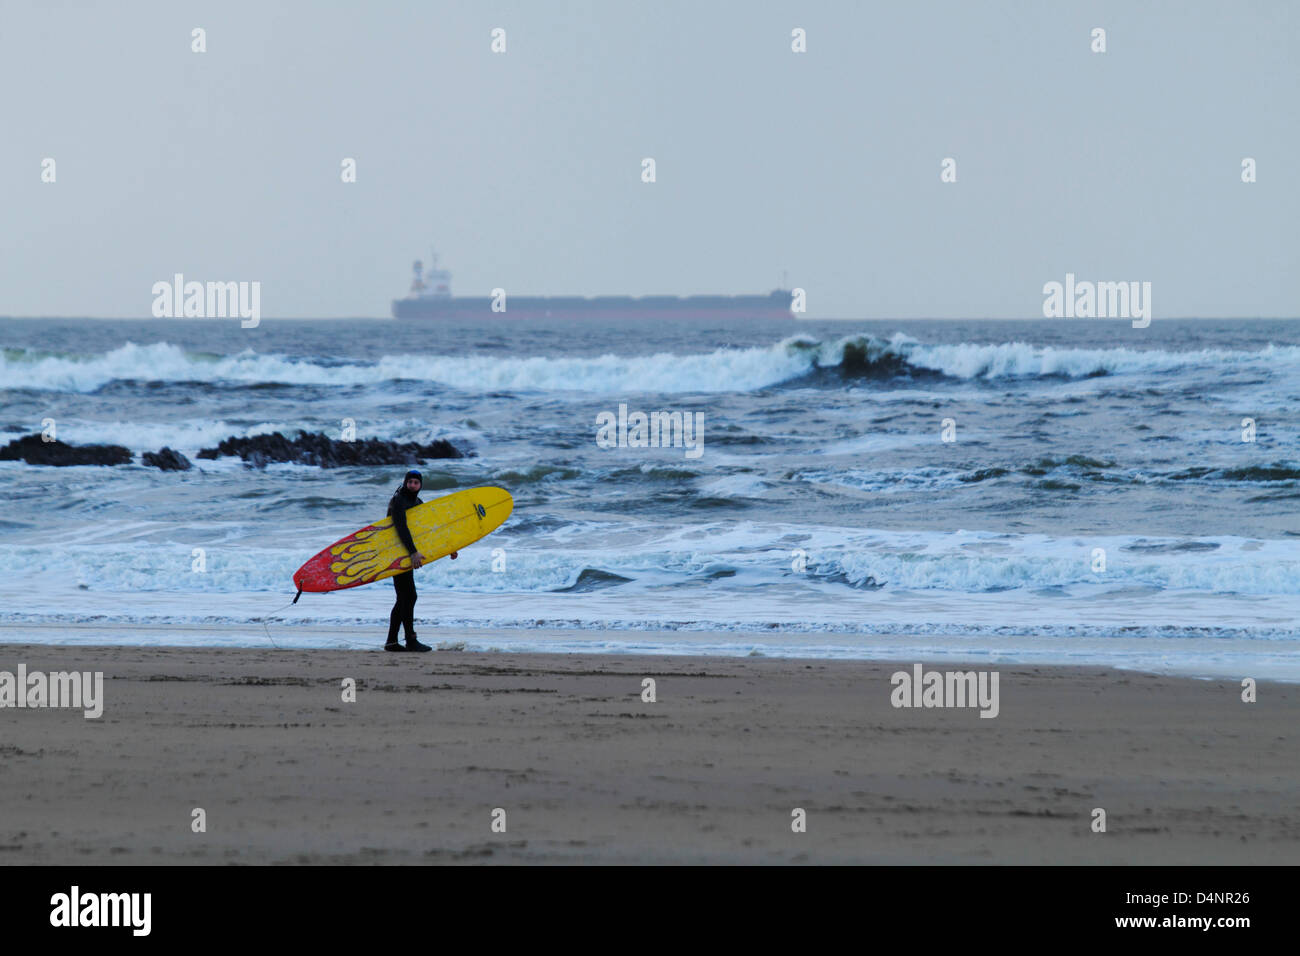 Winter surfing in the Atlantic ocean off Ballybunion beach on Ireland's west coast, County Kerry, Republic of Ireland Stock Photo